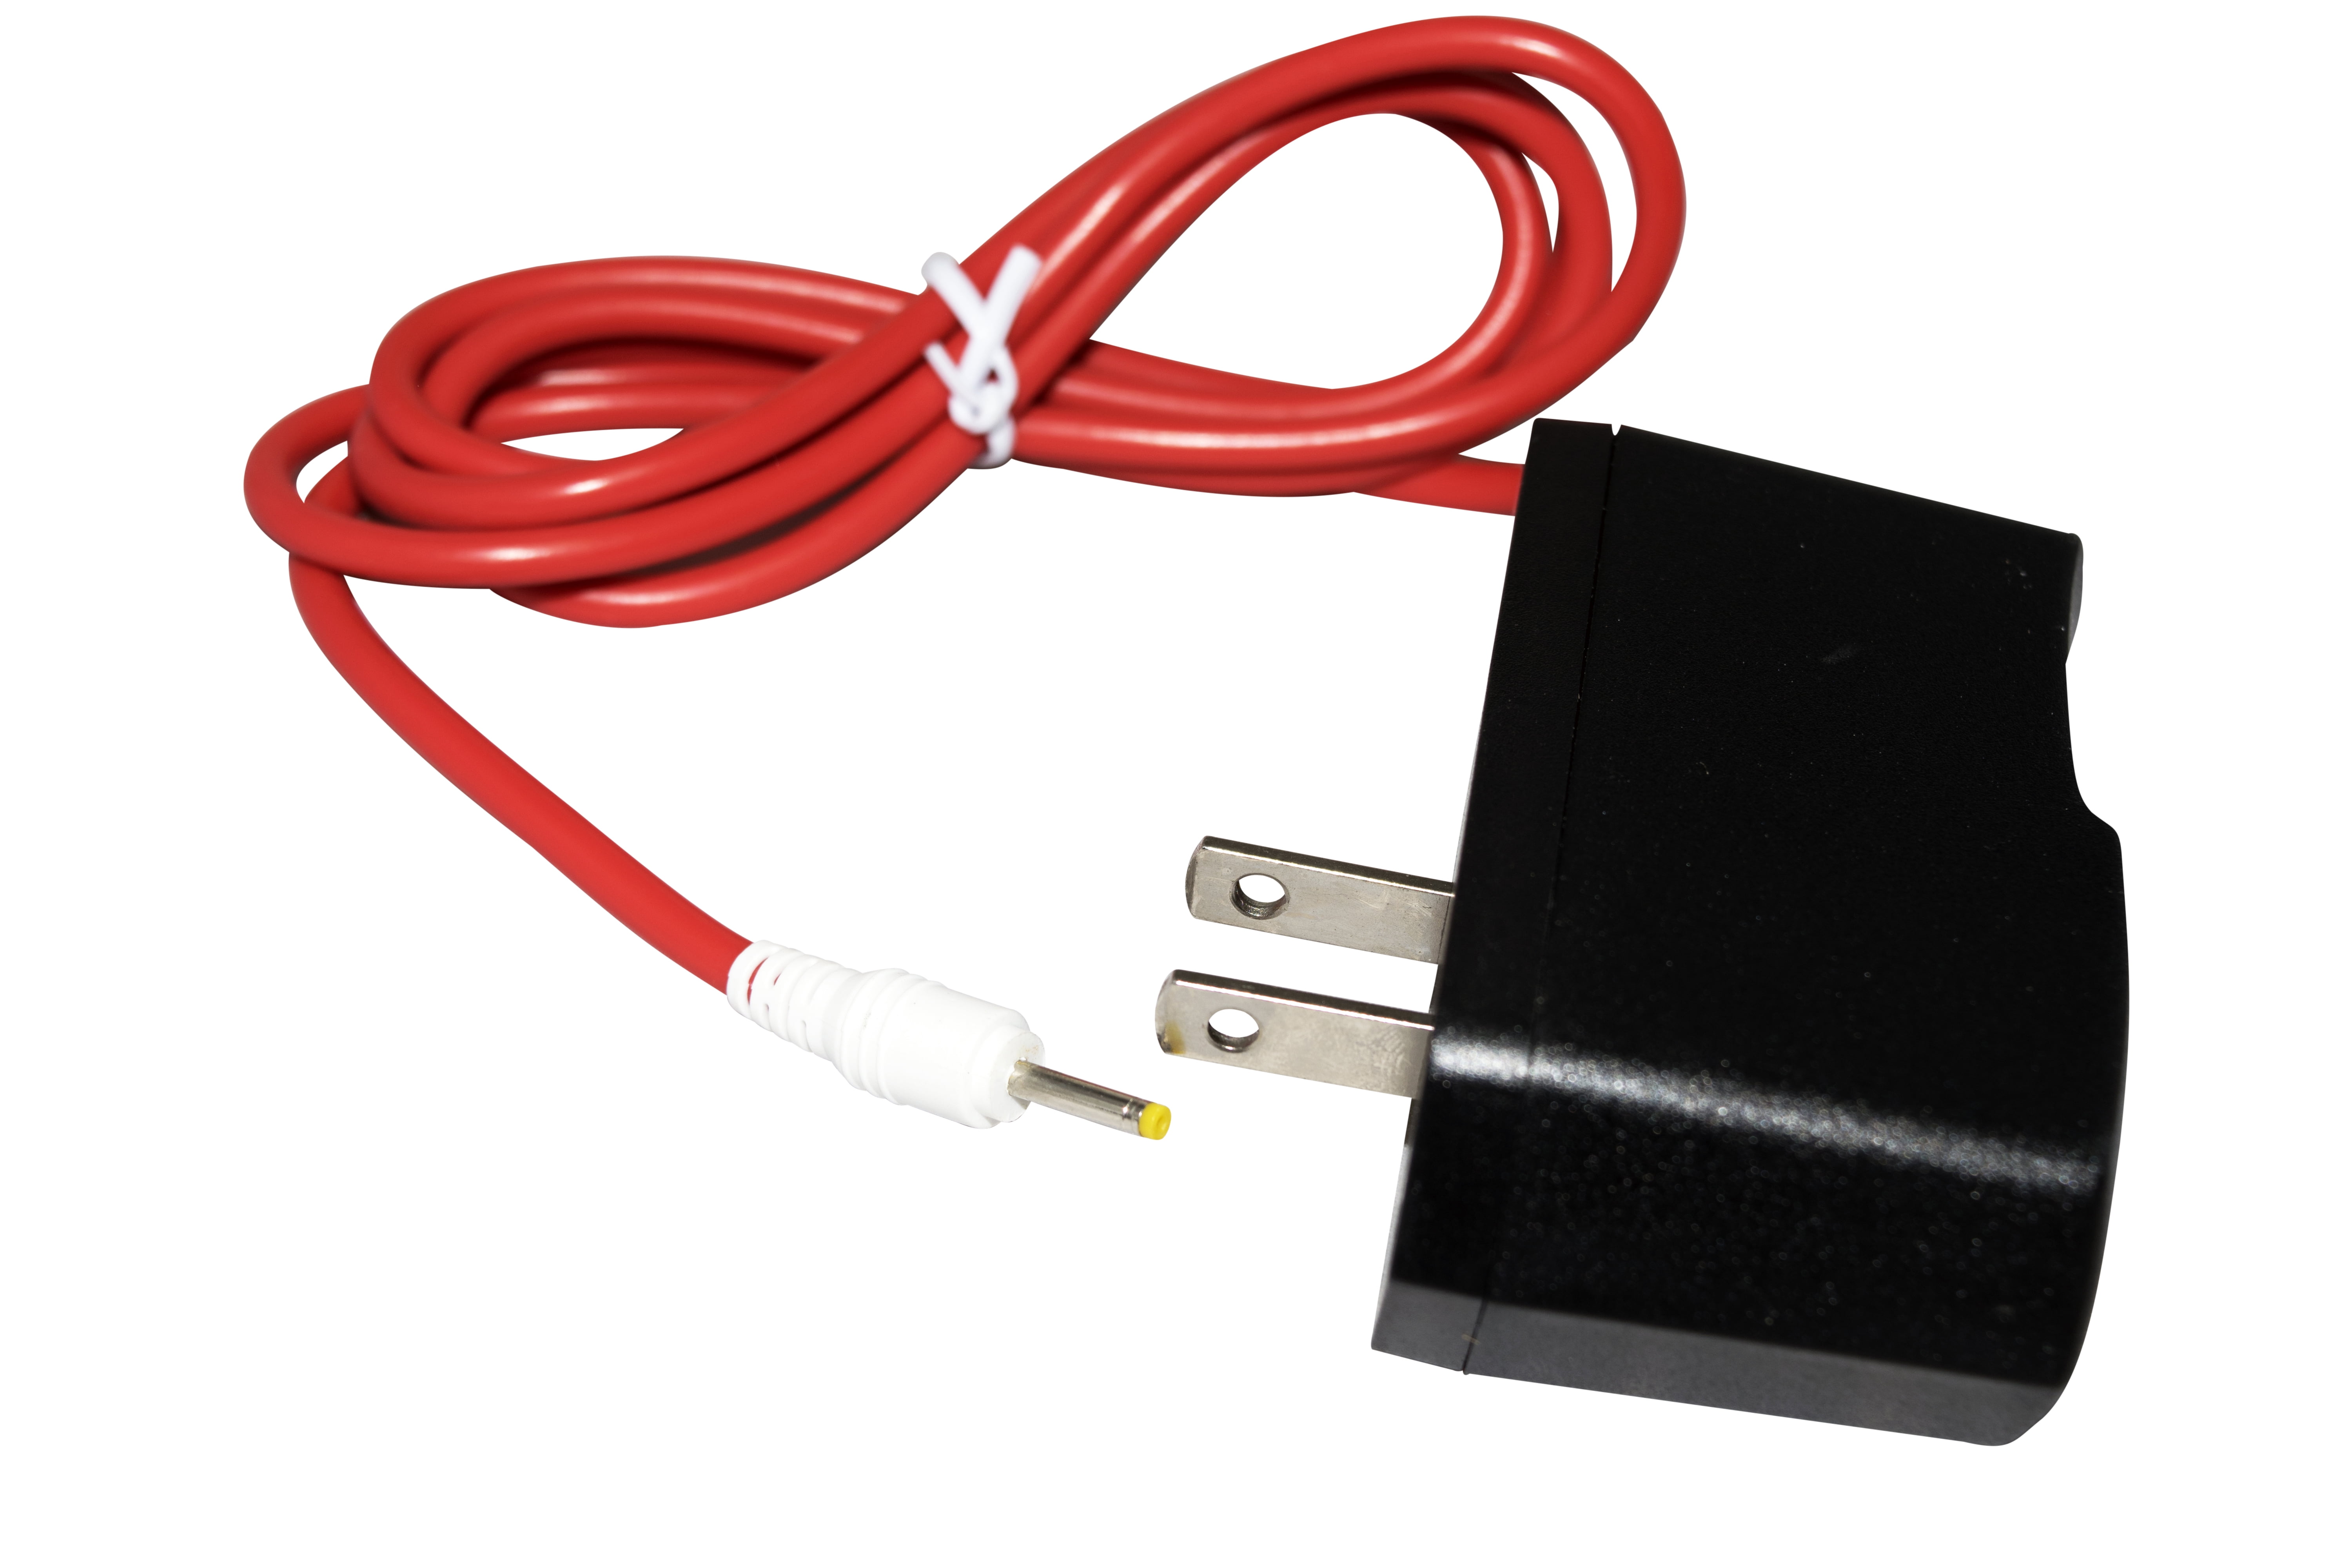 SLLEA 3FT USB to 5V DC Charging Cable Laptop PC Charger Power Cord Lead for Kids Tablet Nabi 2 II NABI2-NV7A NABI2-NVA 